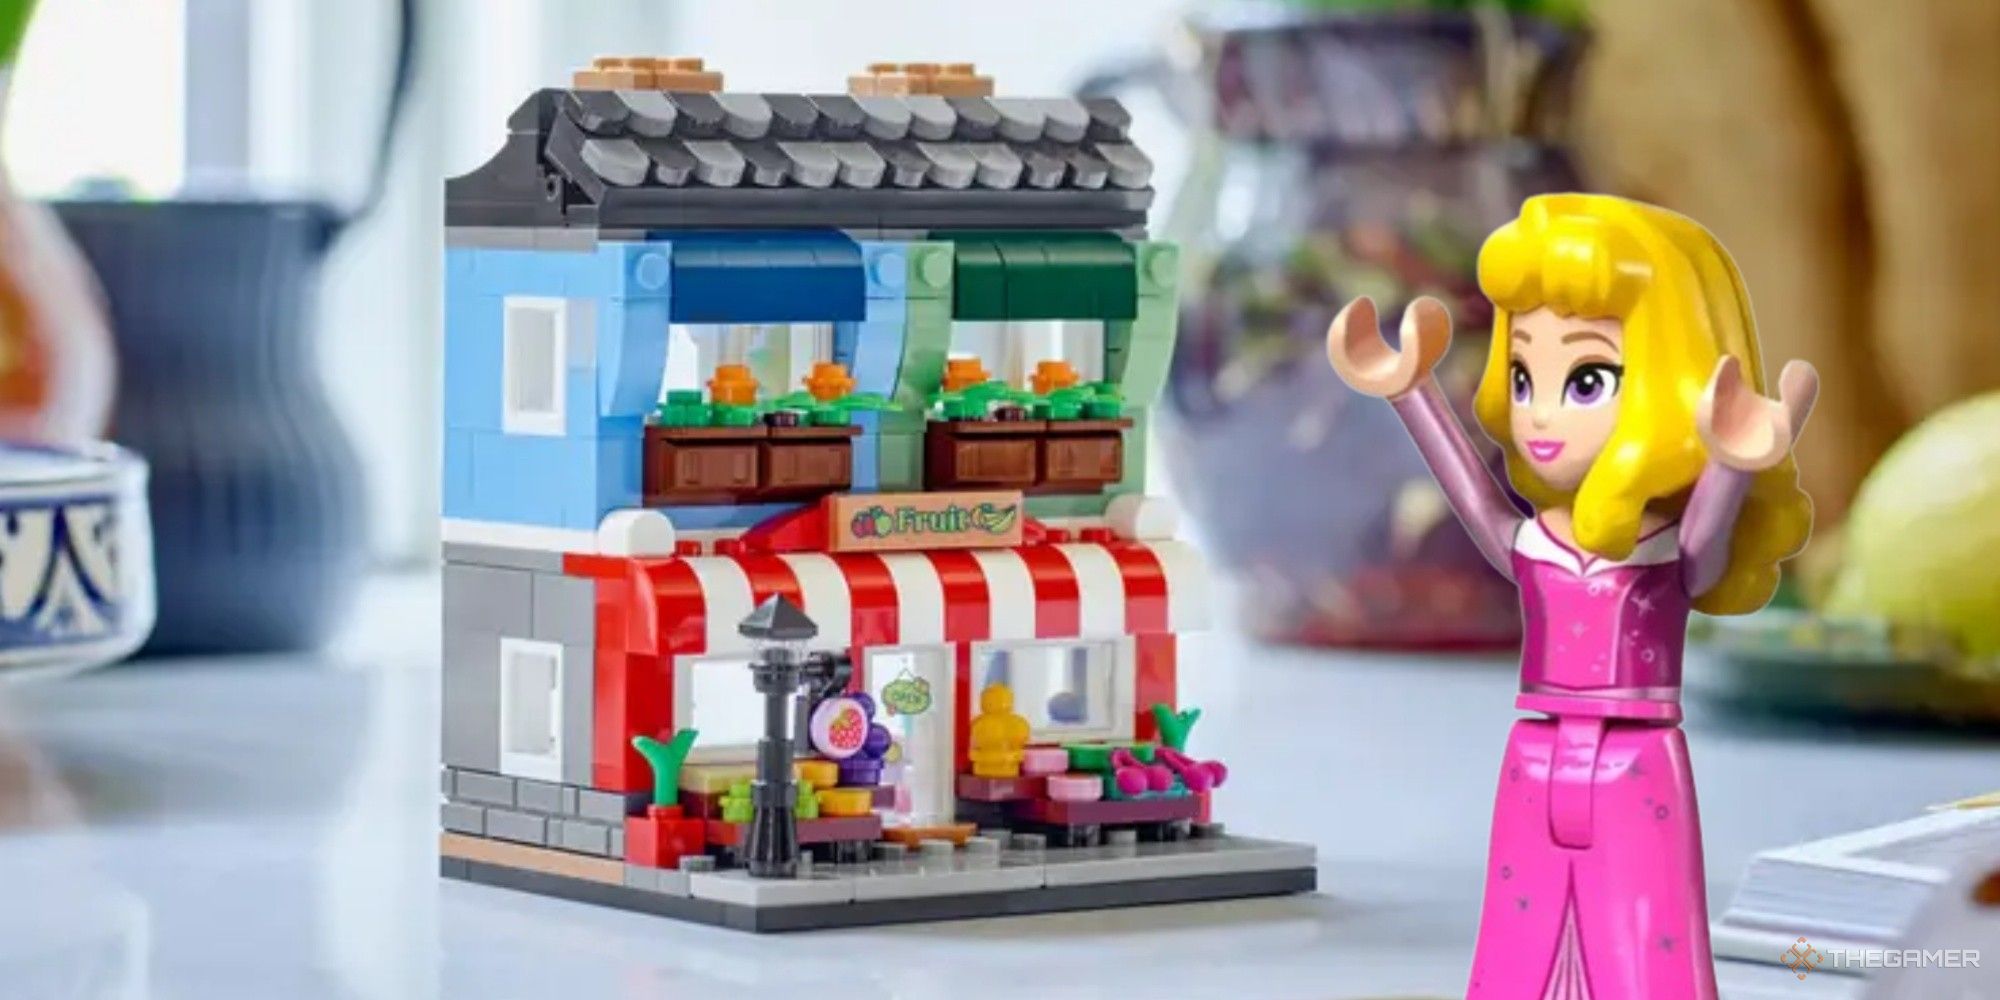 Lego fruit shop and Aurora minifigure